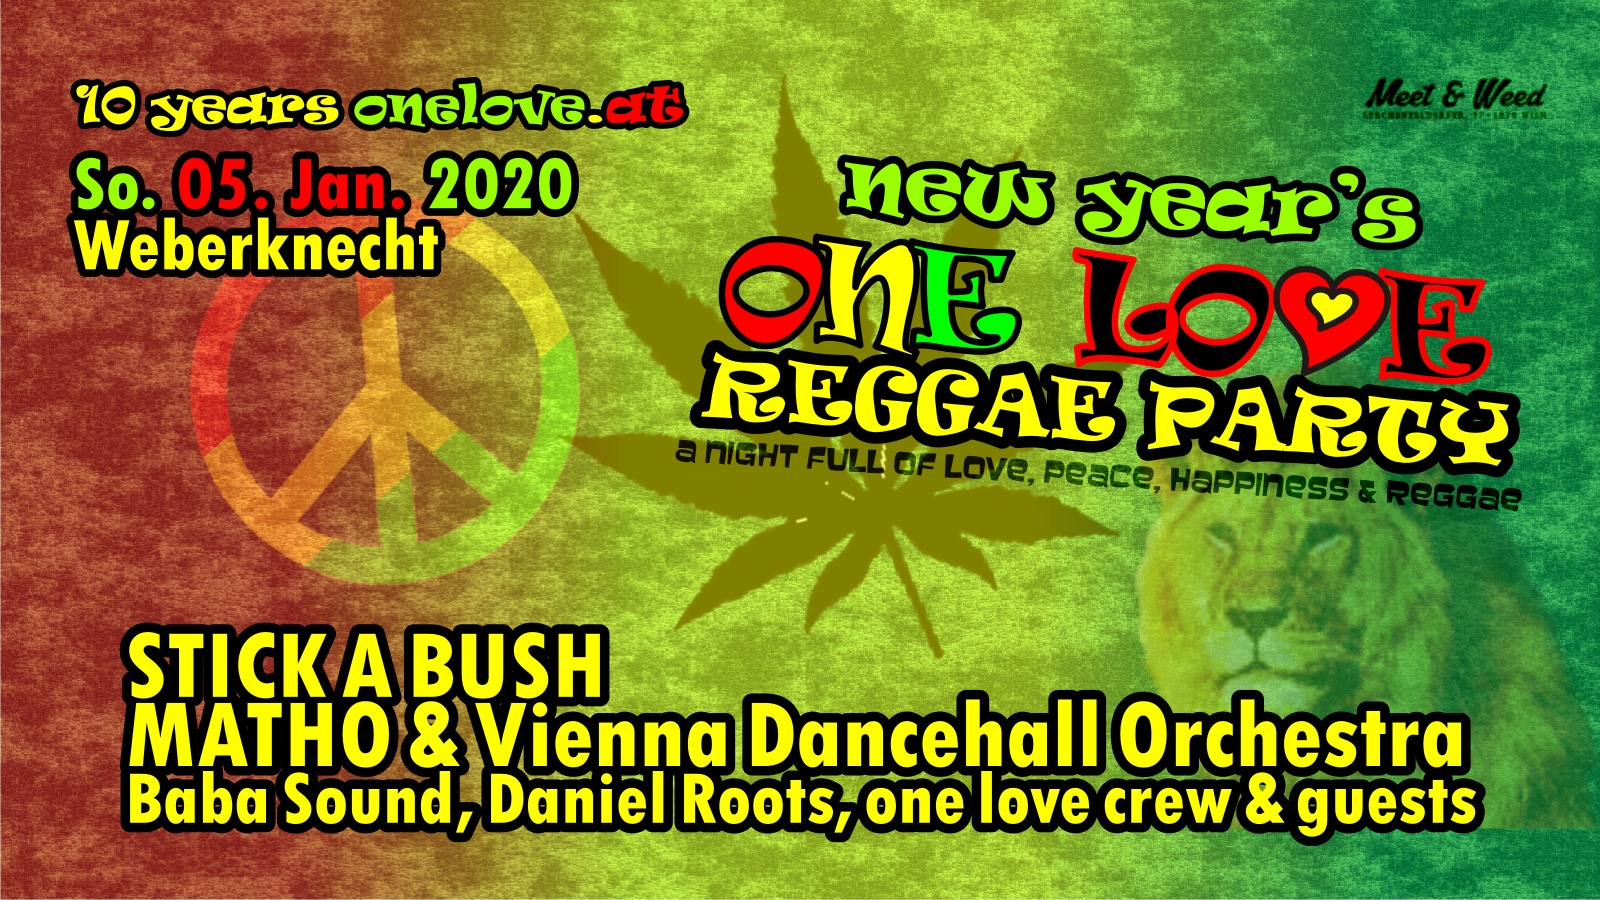 new years ONE LOVE Reggae Party | 10 years onelove.at ft. Stick A Bush + MATHO & Vienna Dancehall Orchestra - 15.1.2020 @ Weberknecht